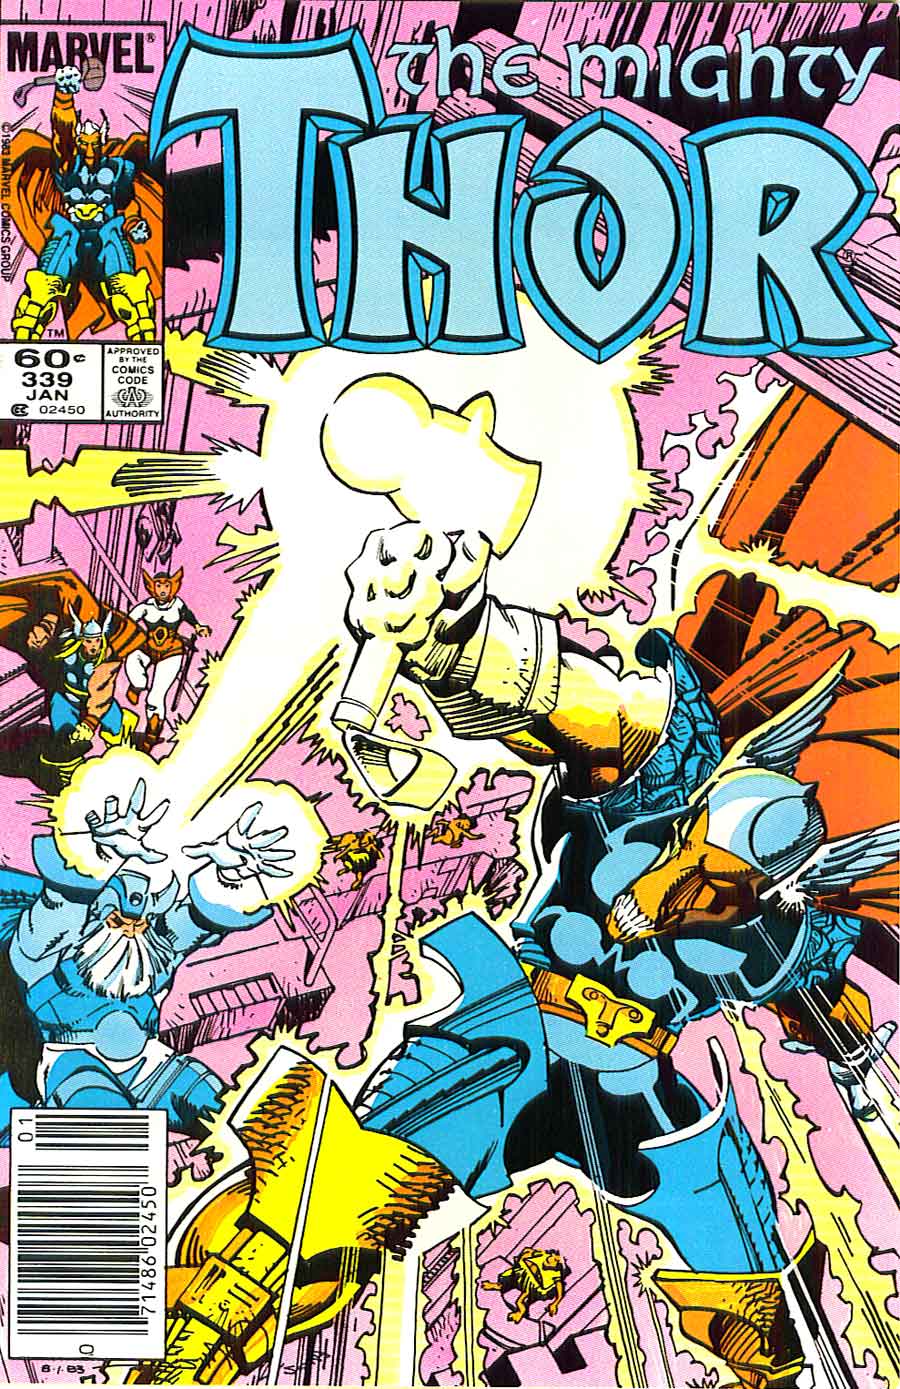 Walt Simonson 1980s marvel comic book cover - Thor #339